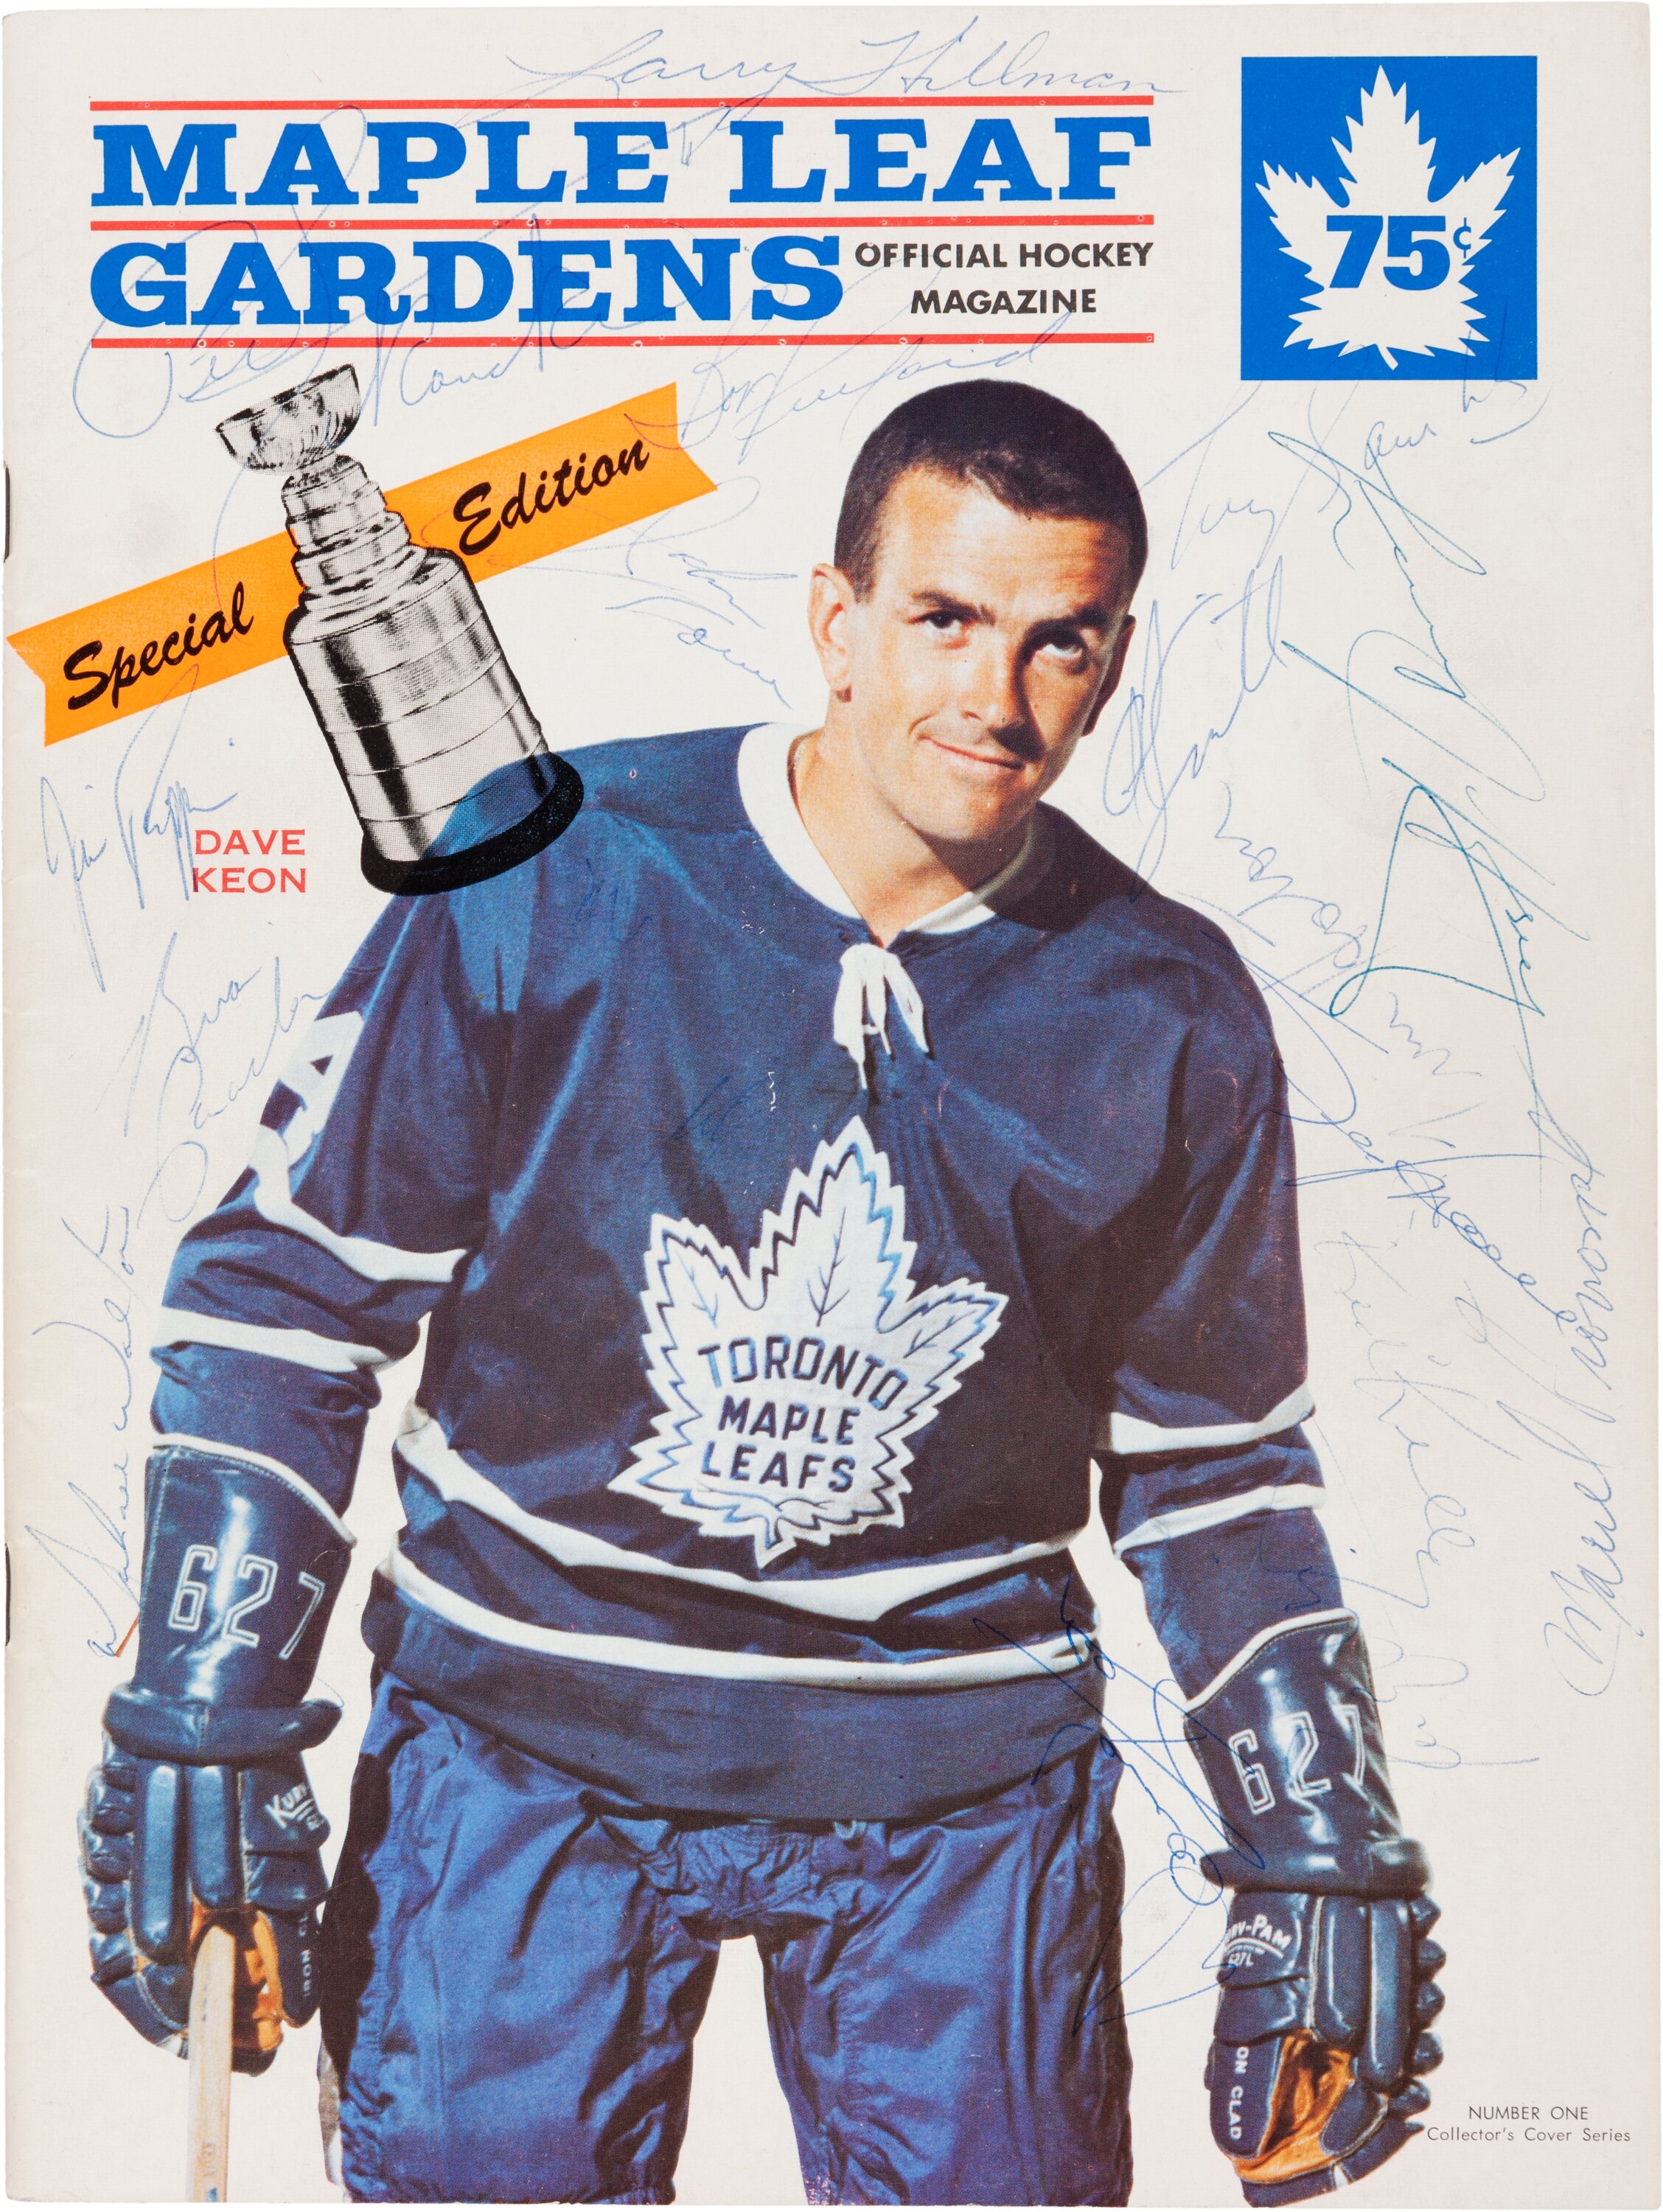 Toronto Maple Leafs 1967 Stanley Cup Presentation - 8x10 B&W Photo